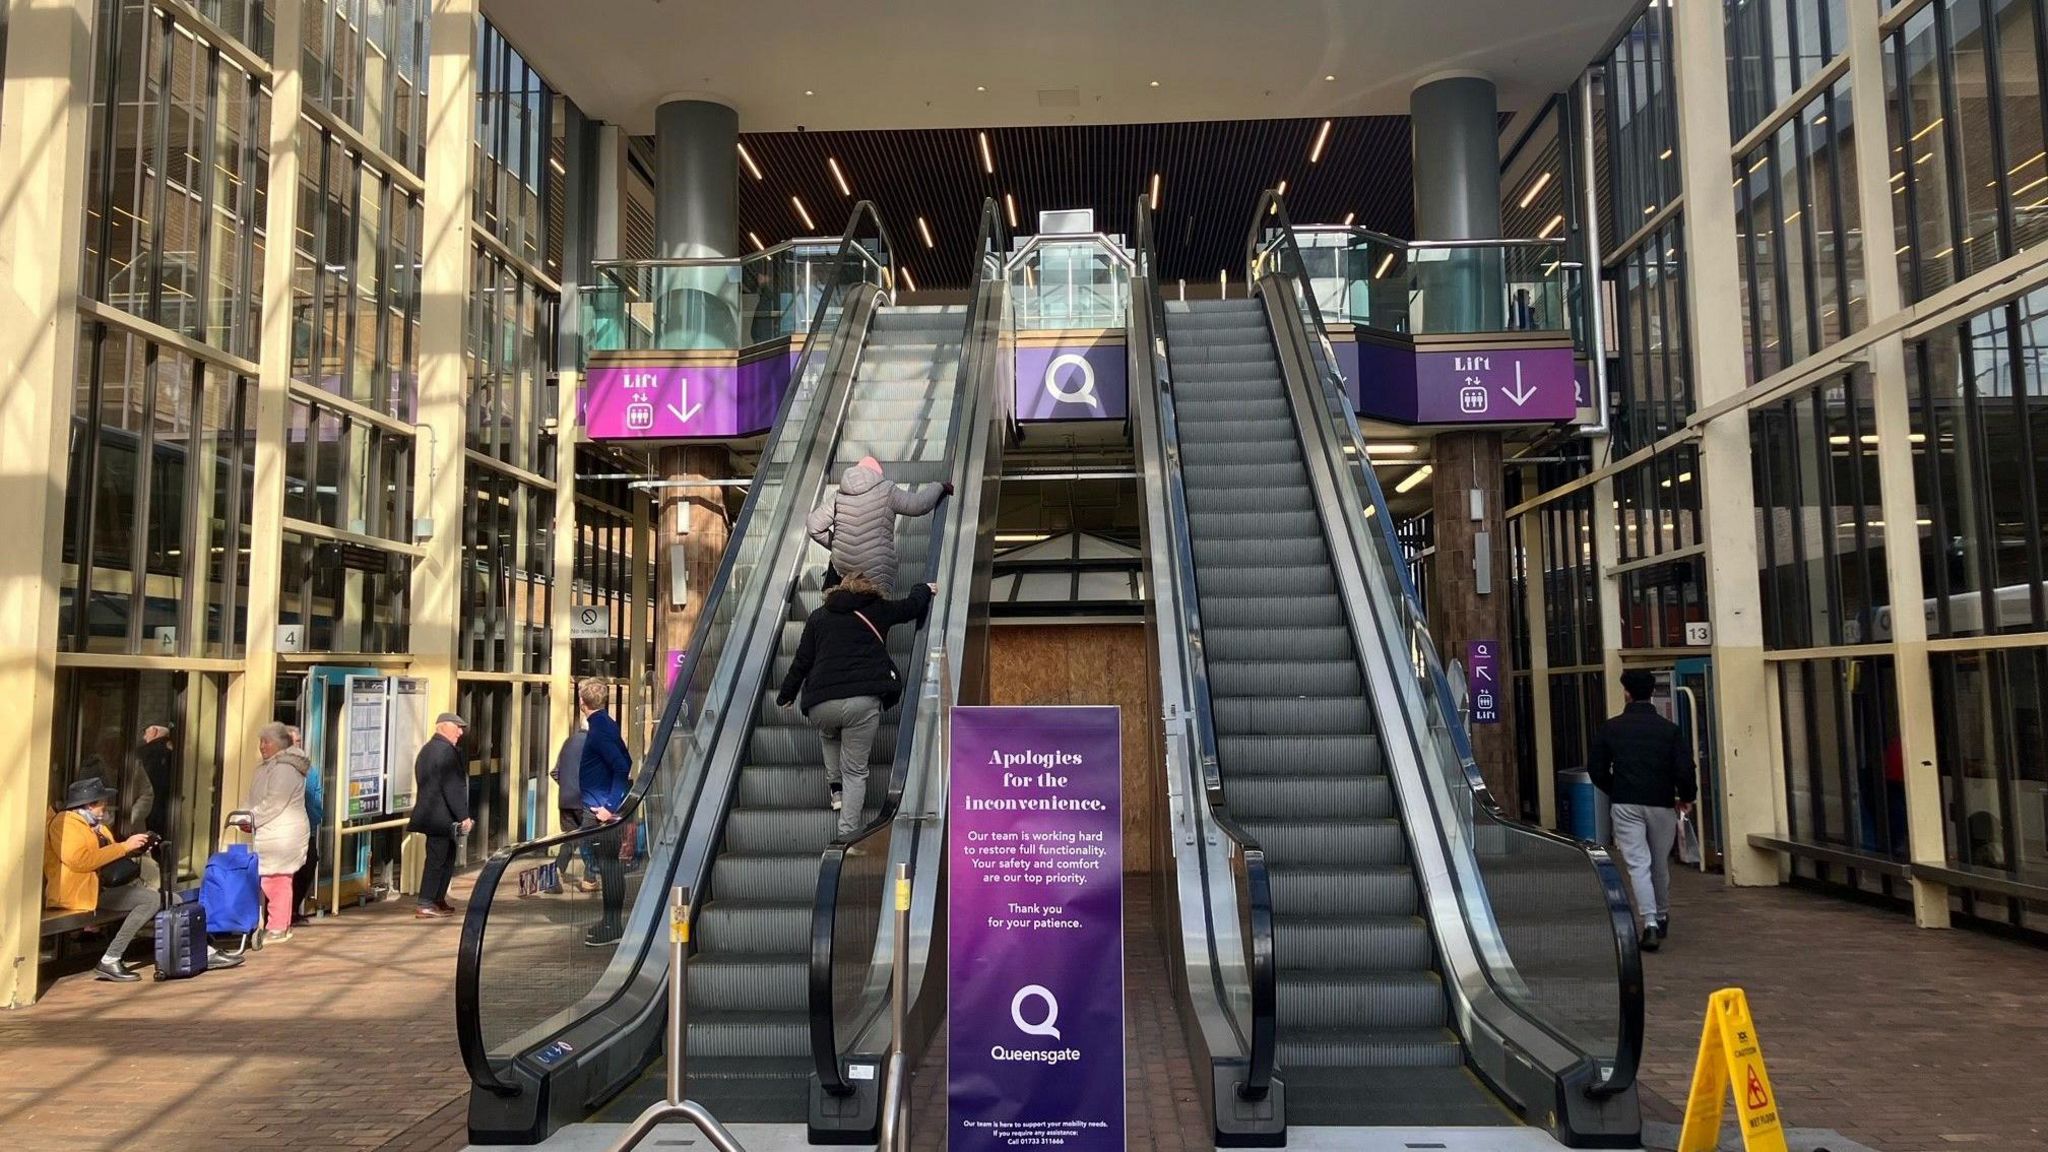 Broken escalators at Queensgate bus station